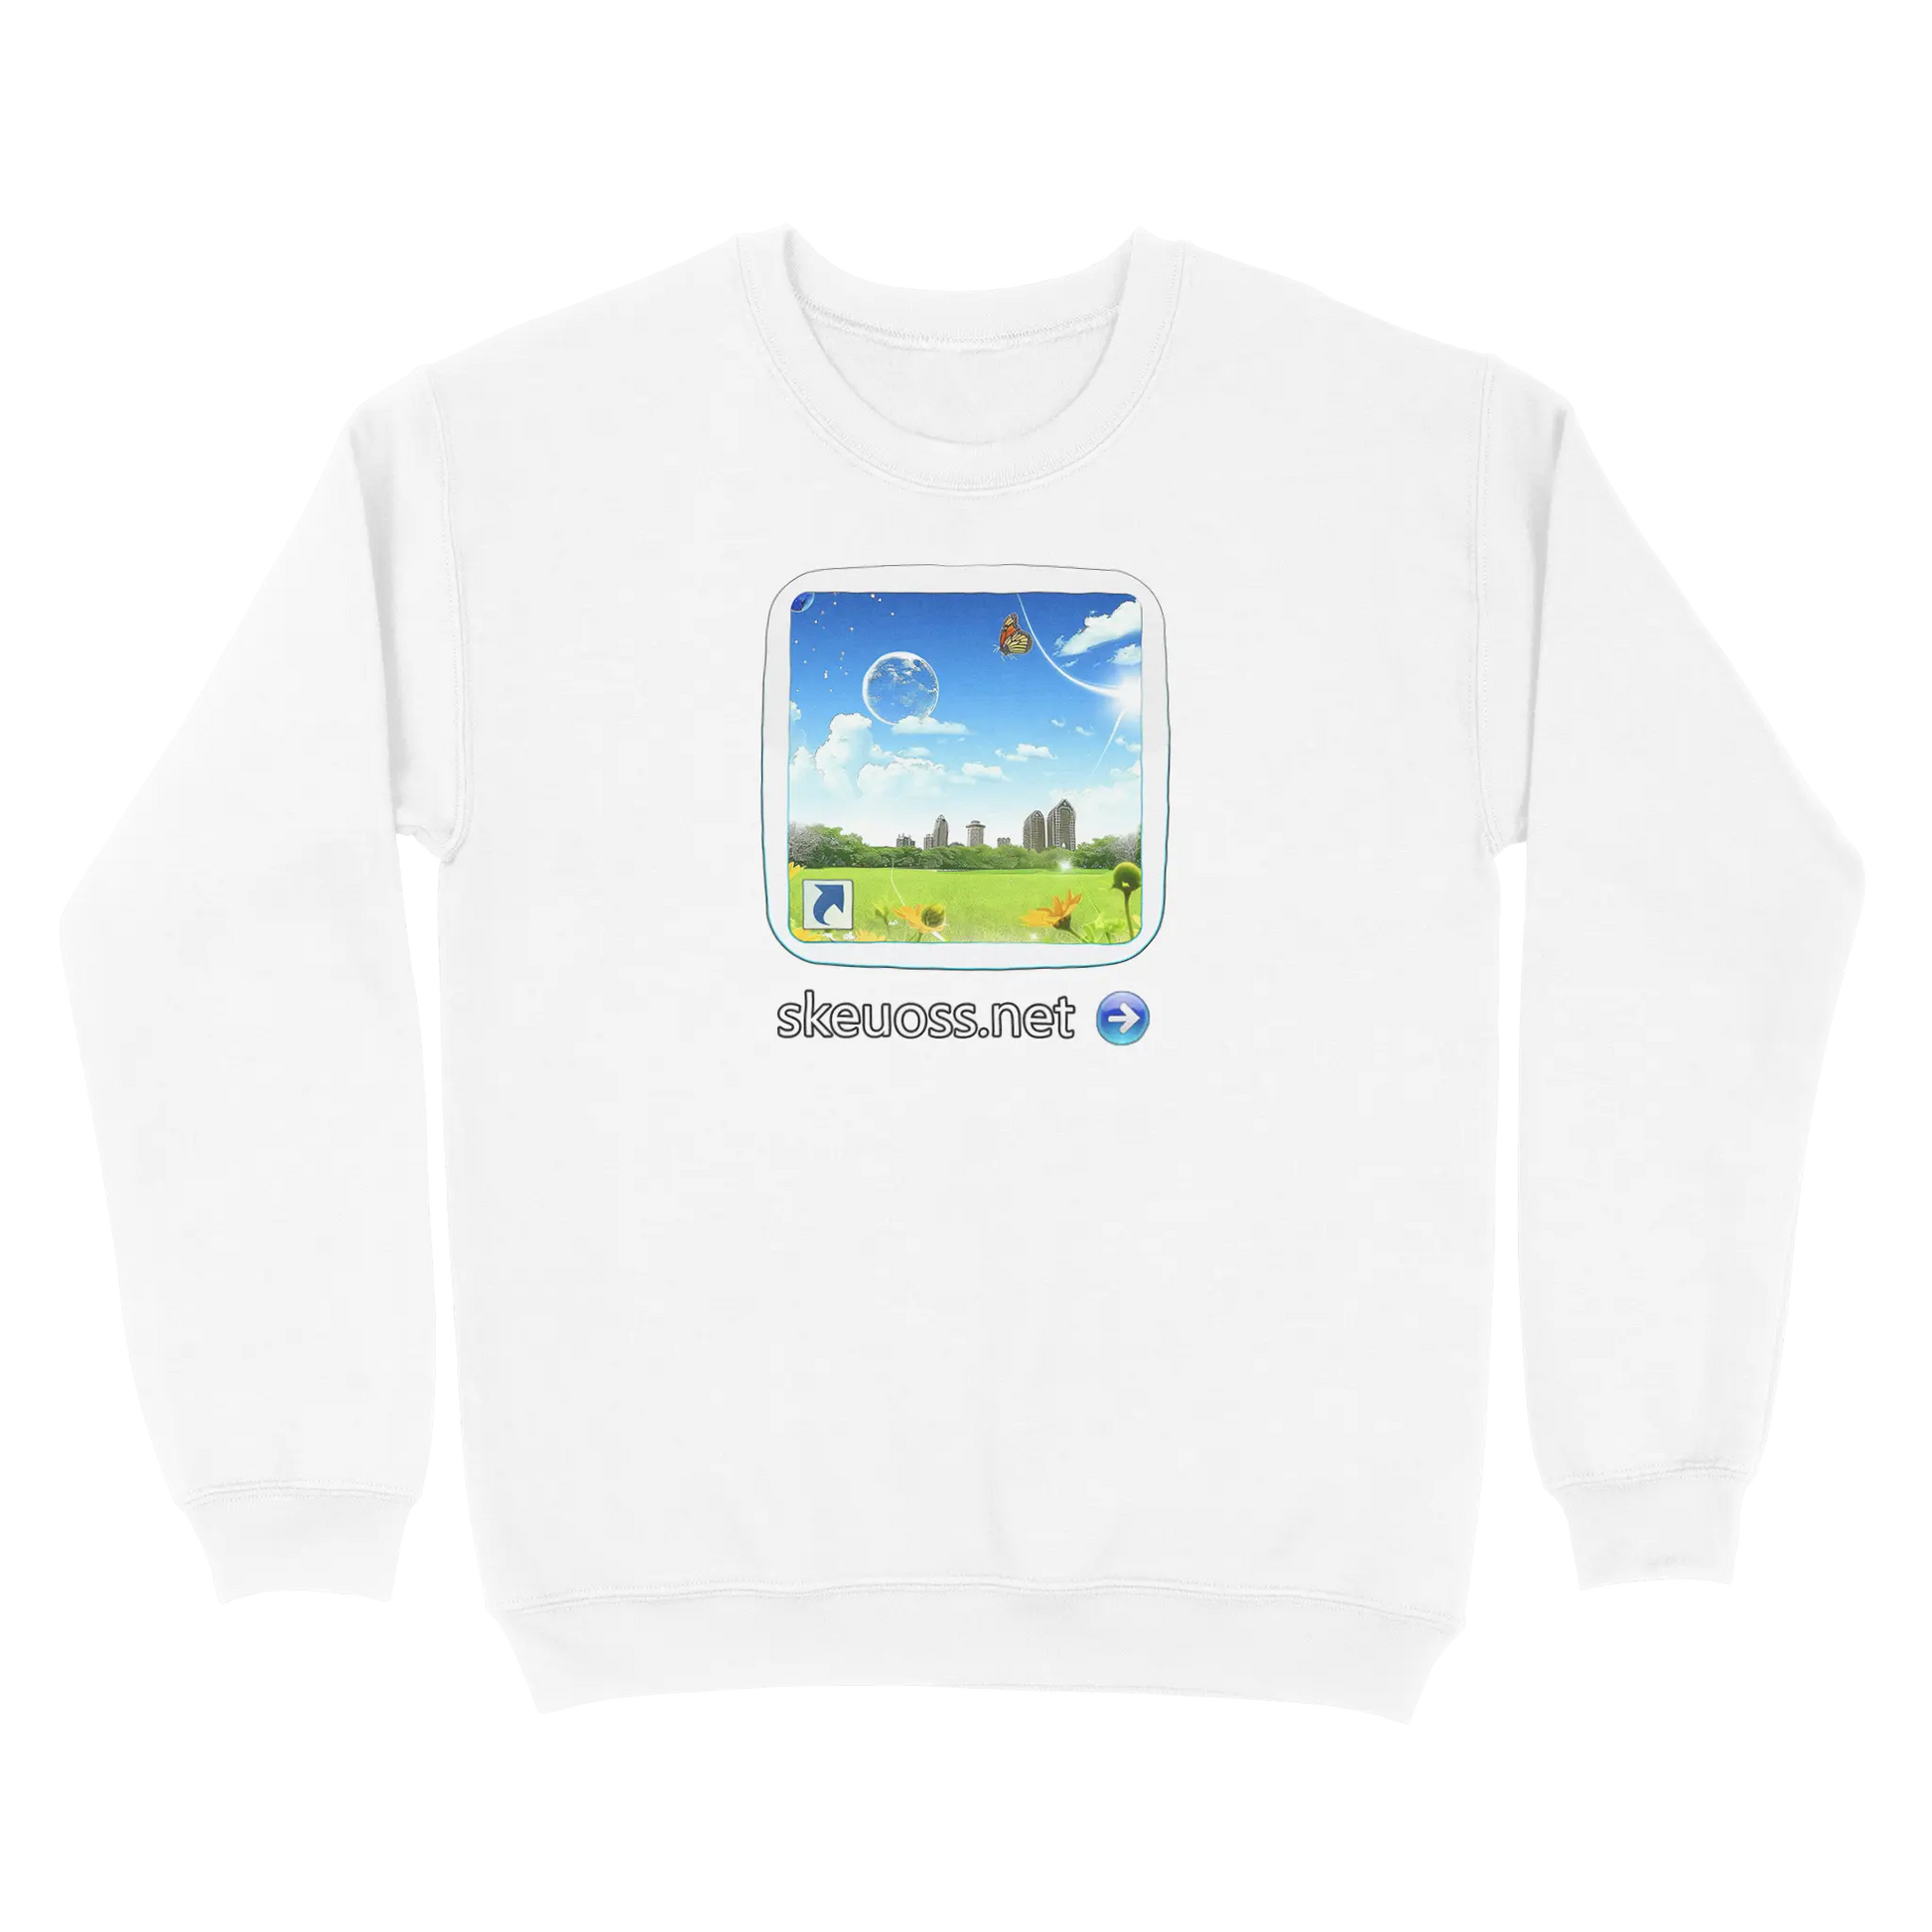 Frutiger Aero Sweatshirt - User Login Collection - User 374